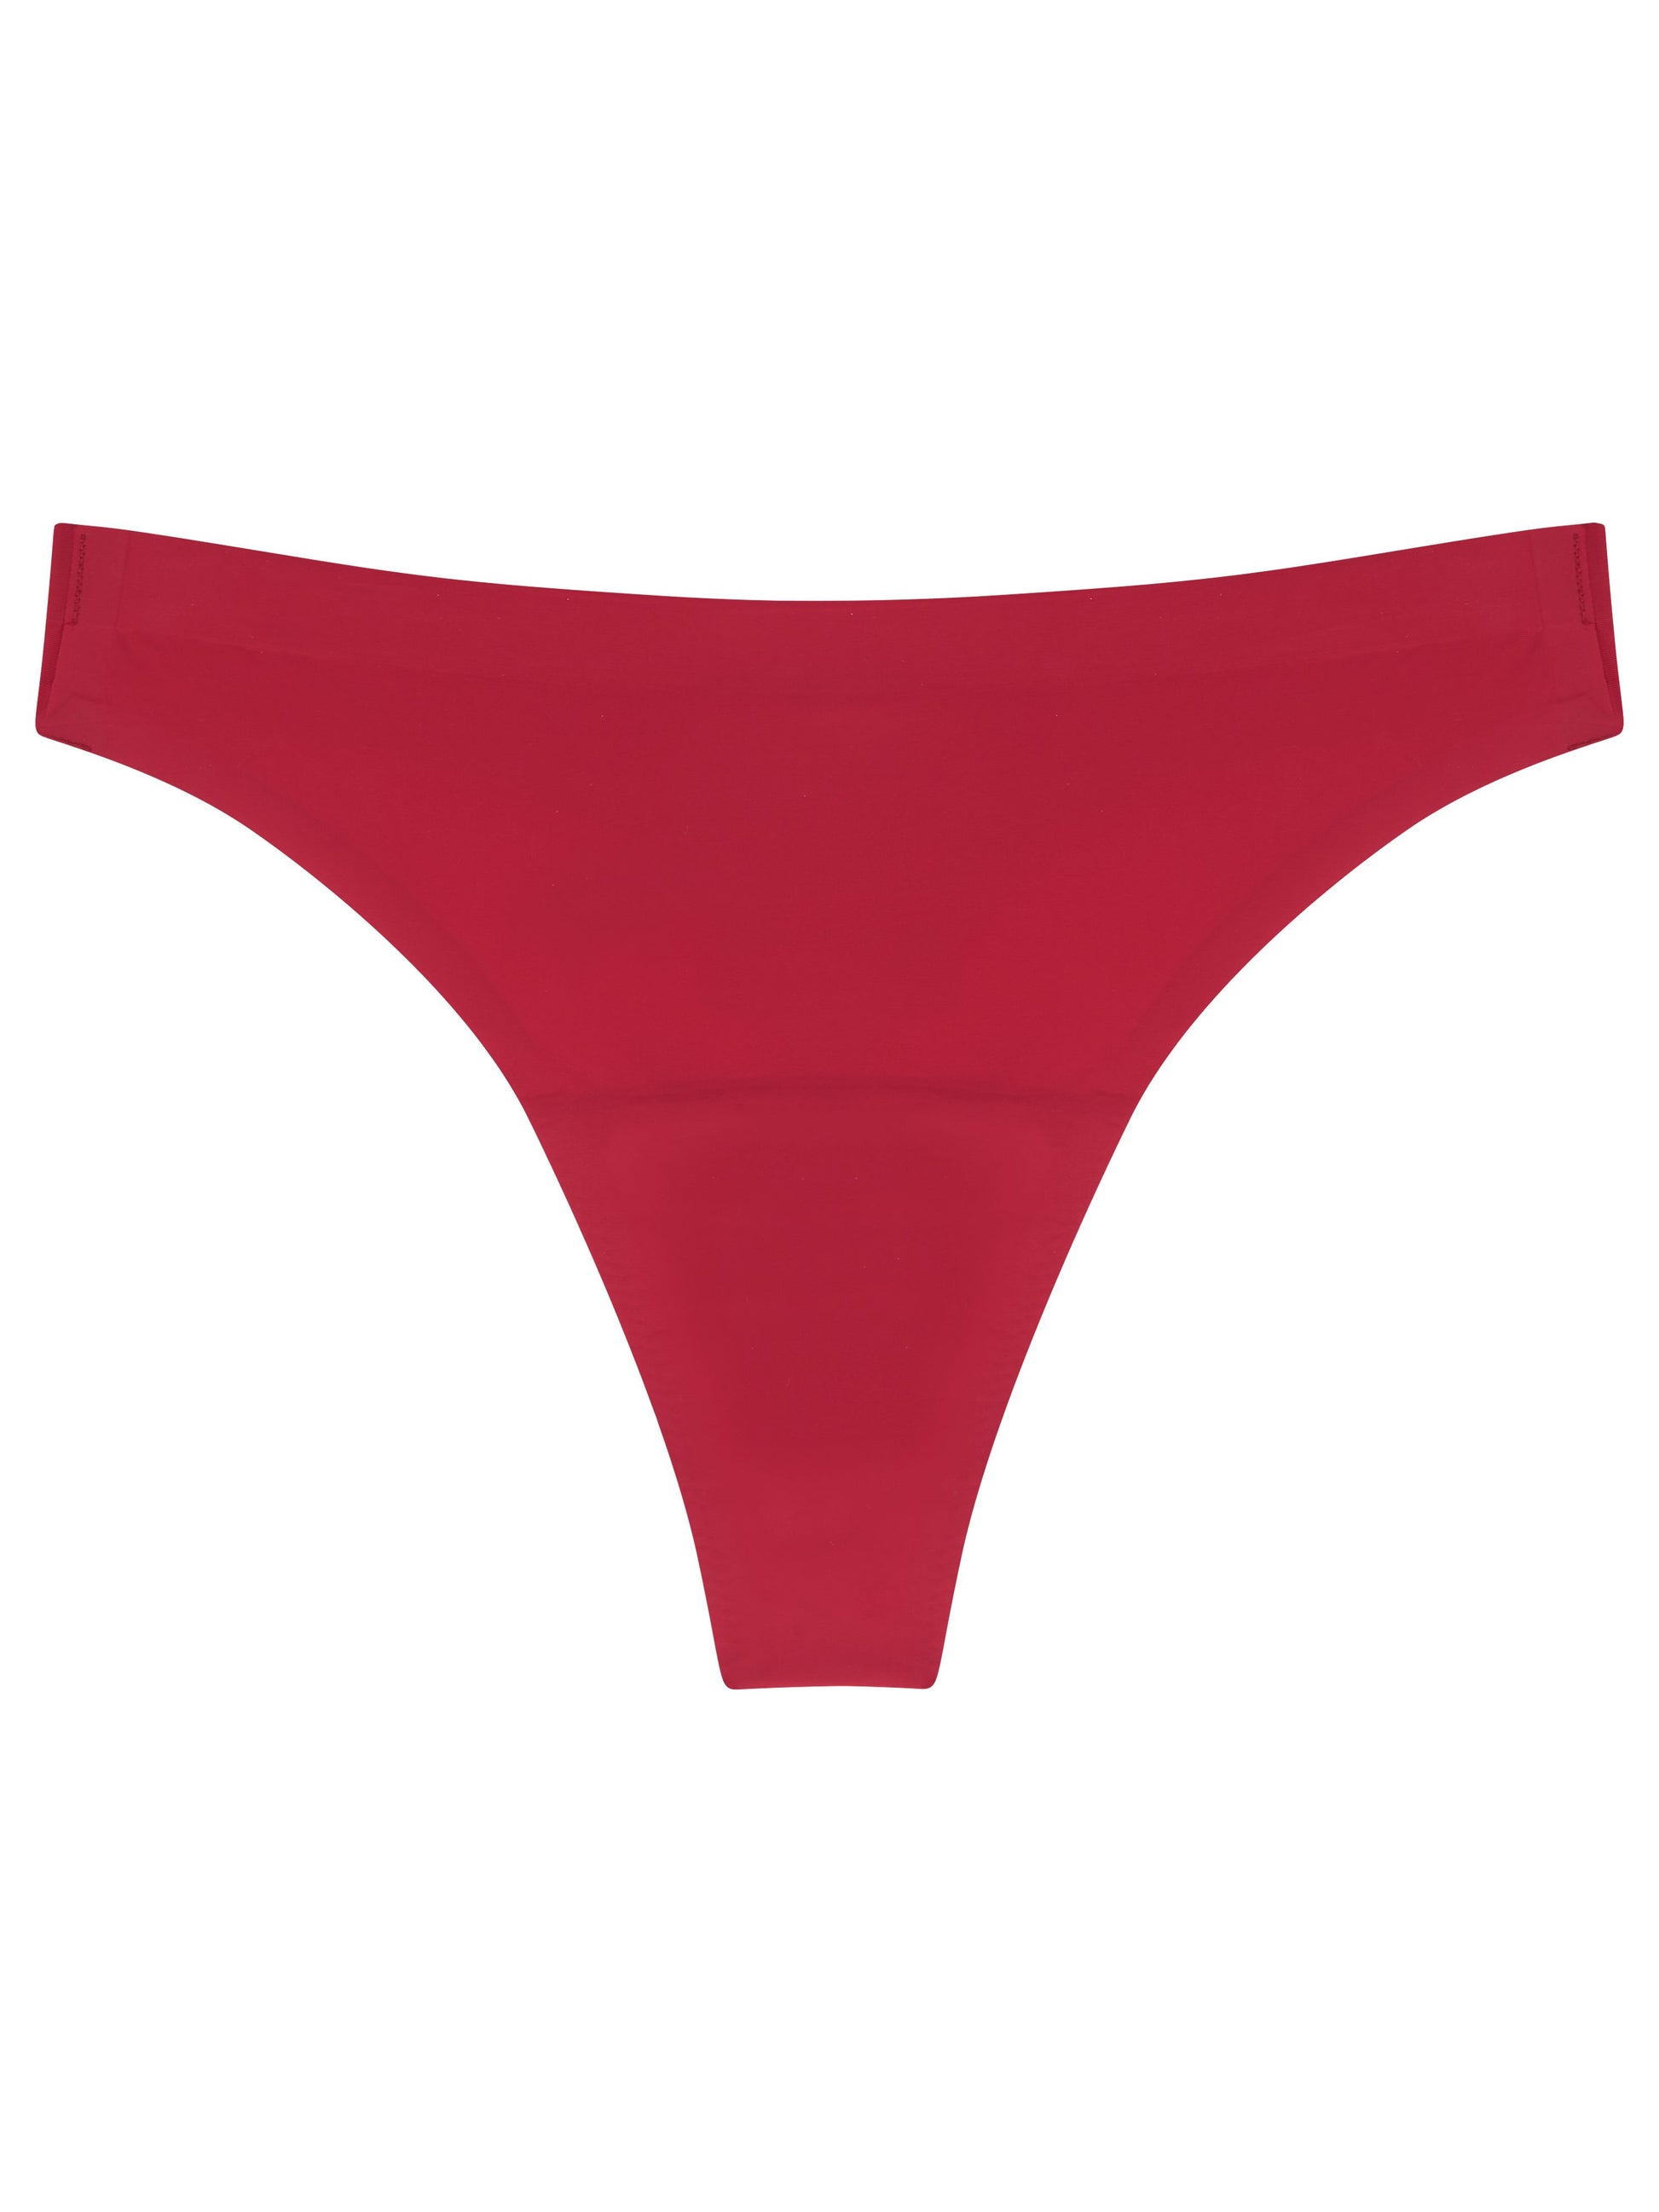 Imaara Feminine Period Underwear Inclusive Knickers. Product Padma Poppy